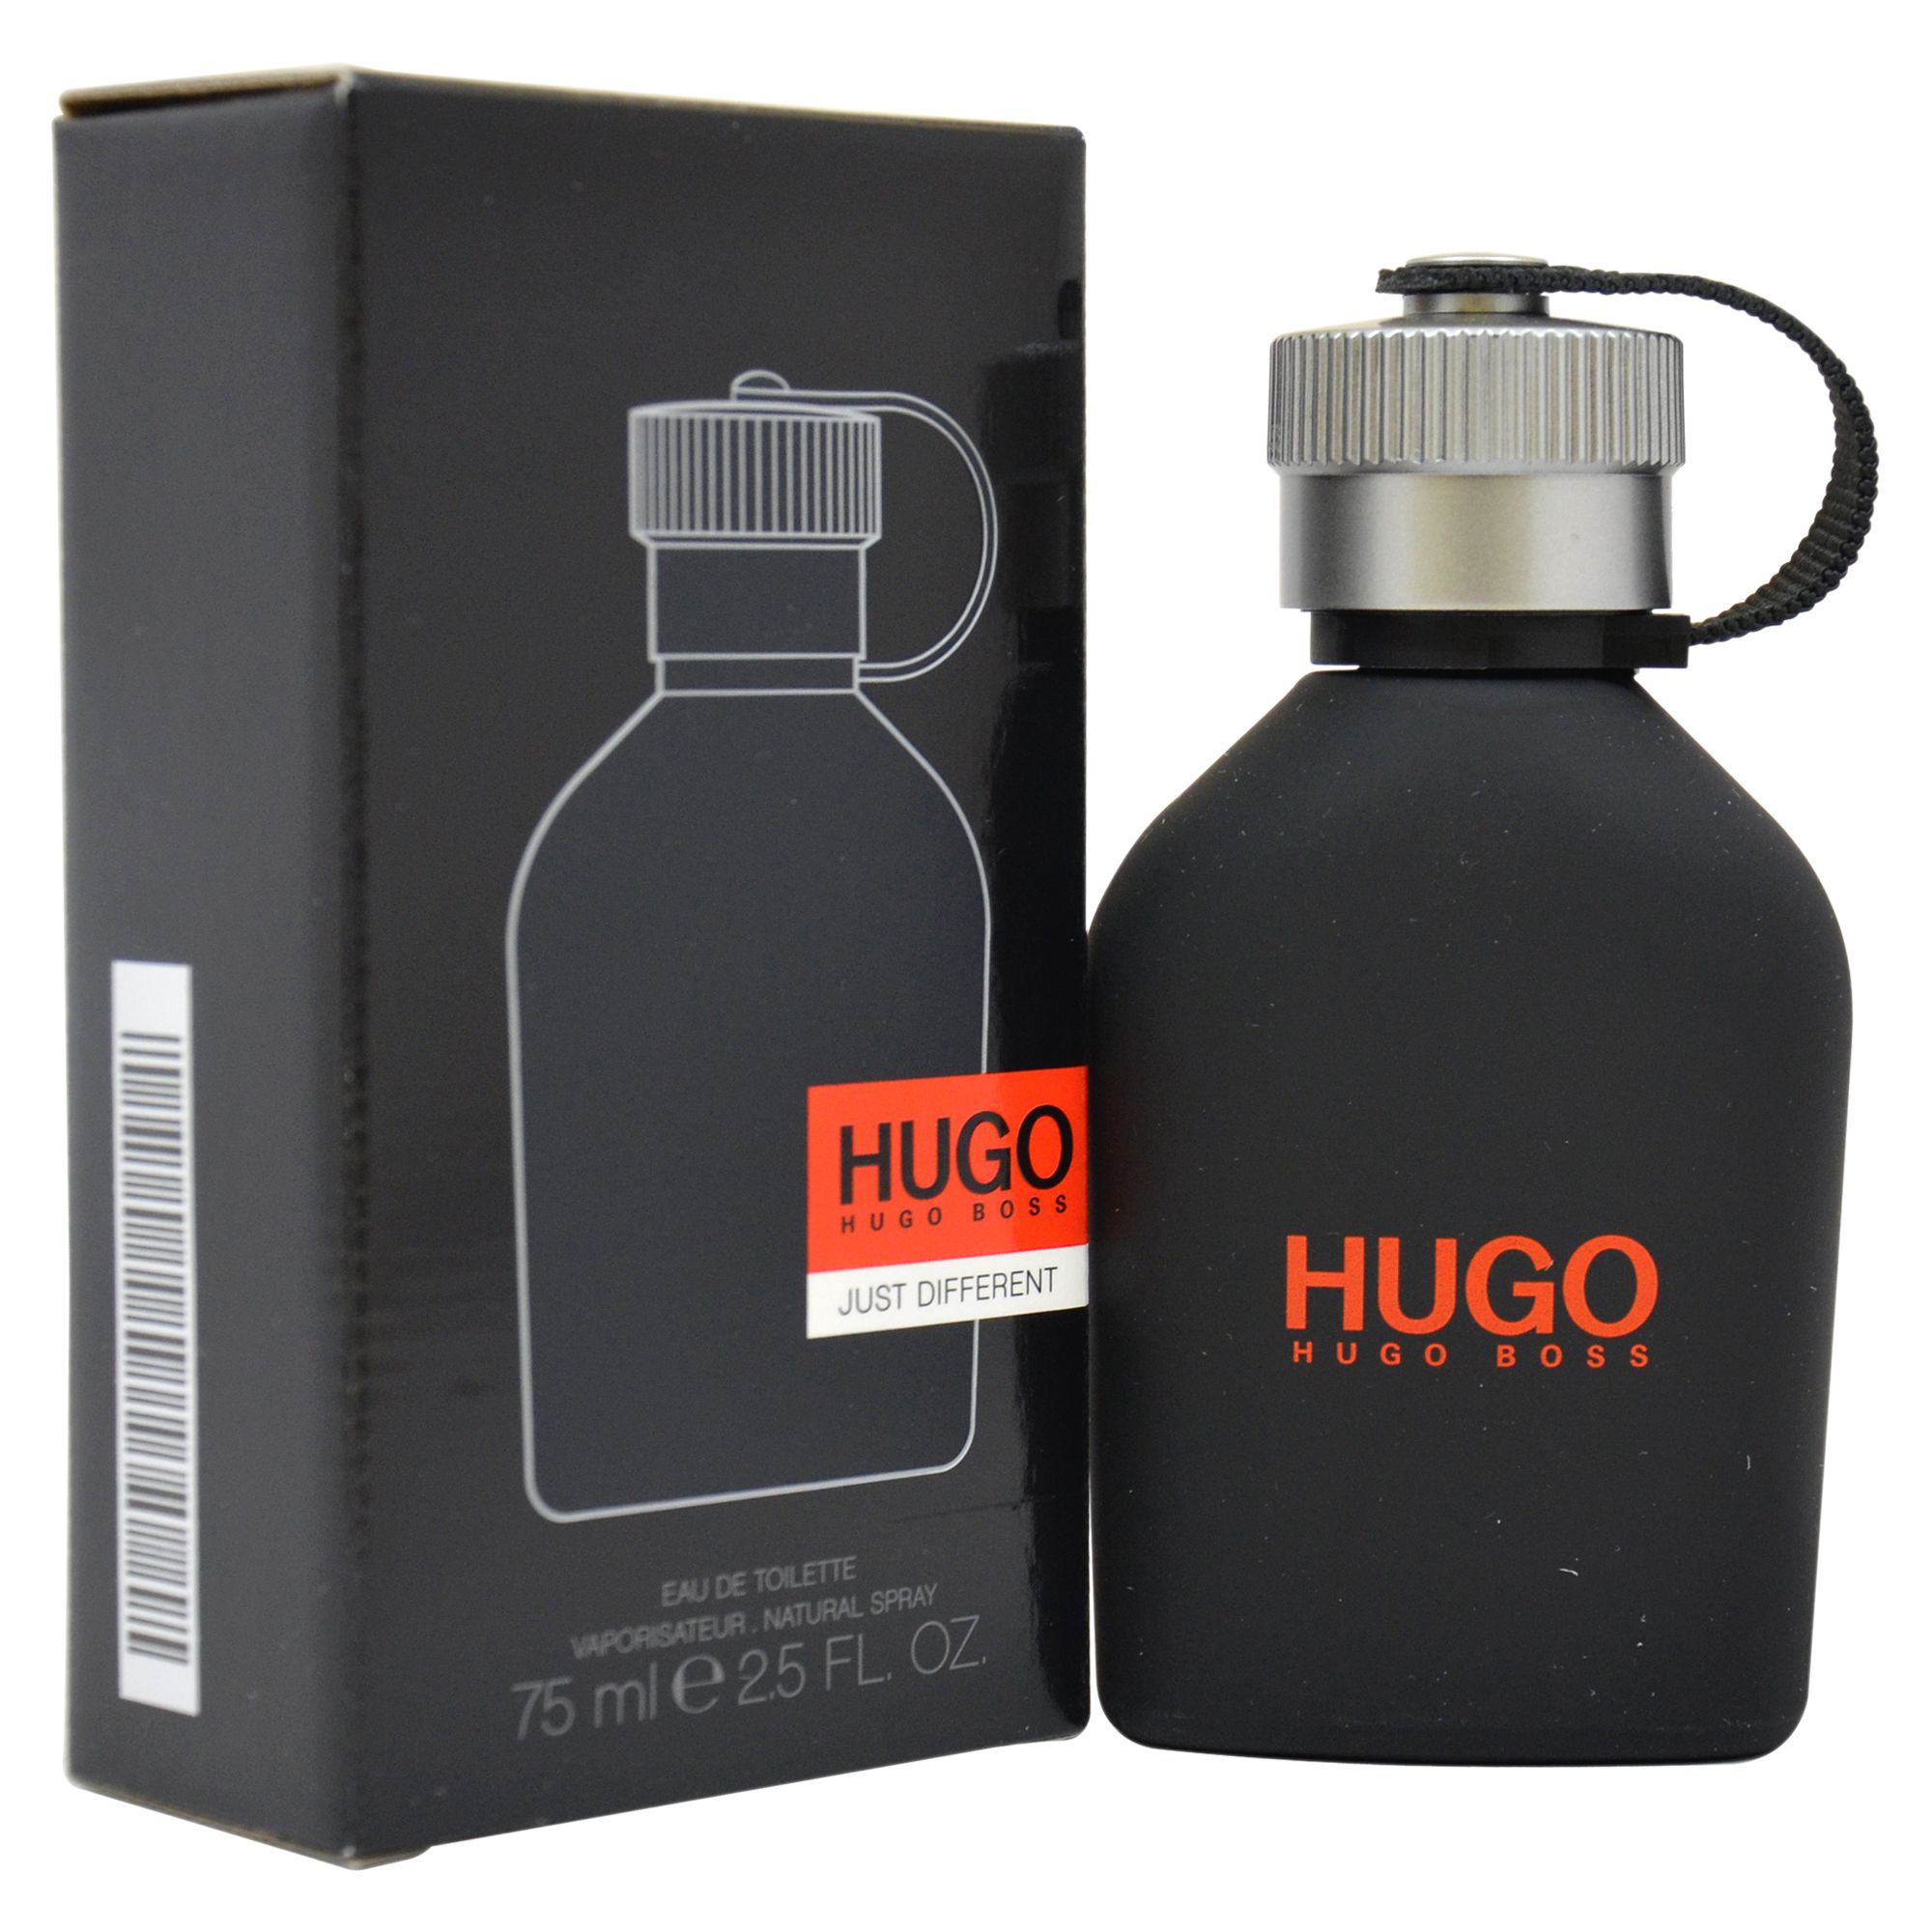 HUGO BOSS JUST DIFFERENT EDT 75ML FOR MEN - Perfume in Bangladesh